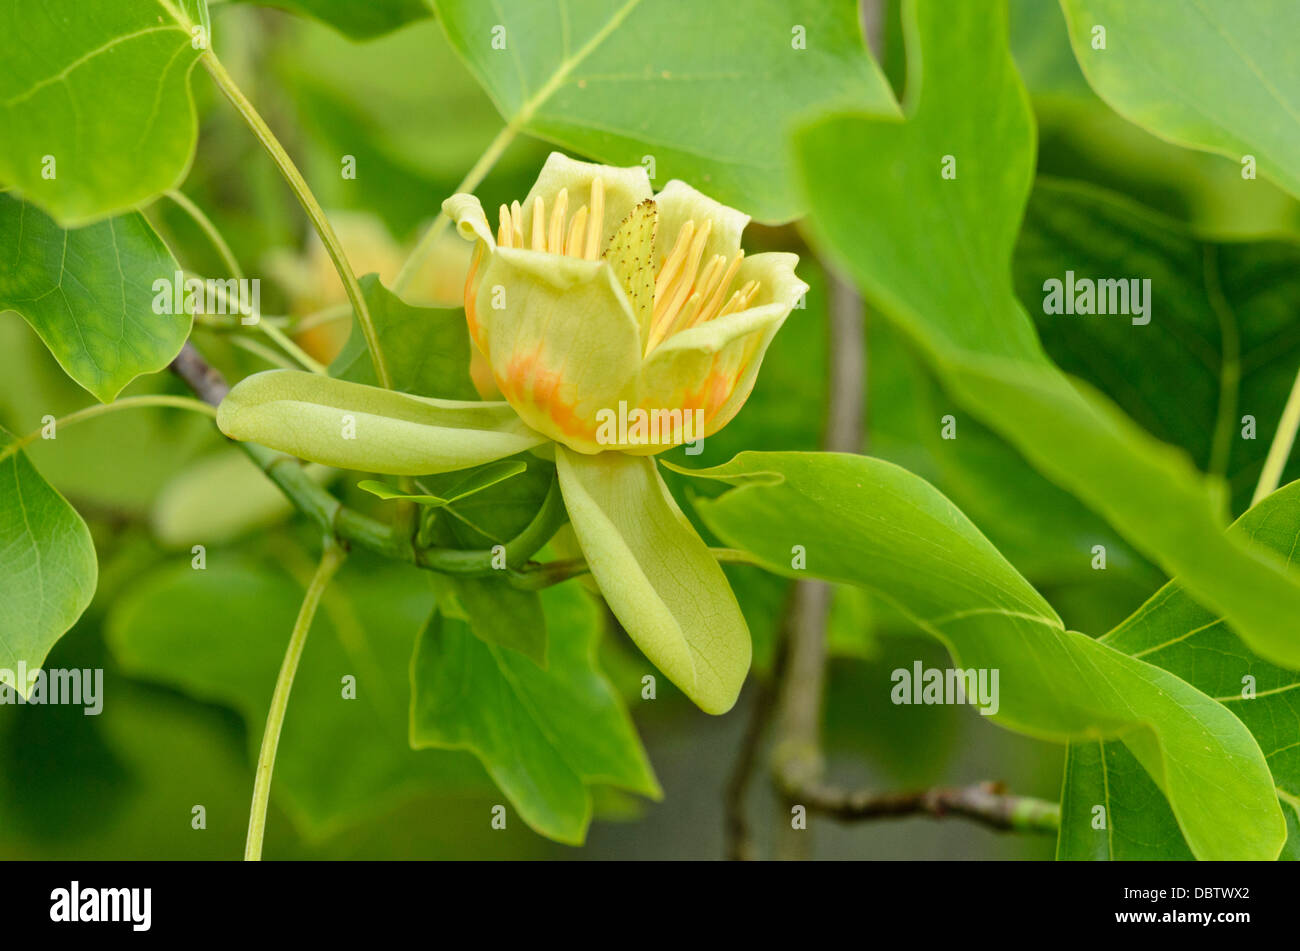 American tulip tree (Liriodendron tulipifera) Stock Photo